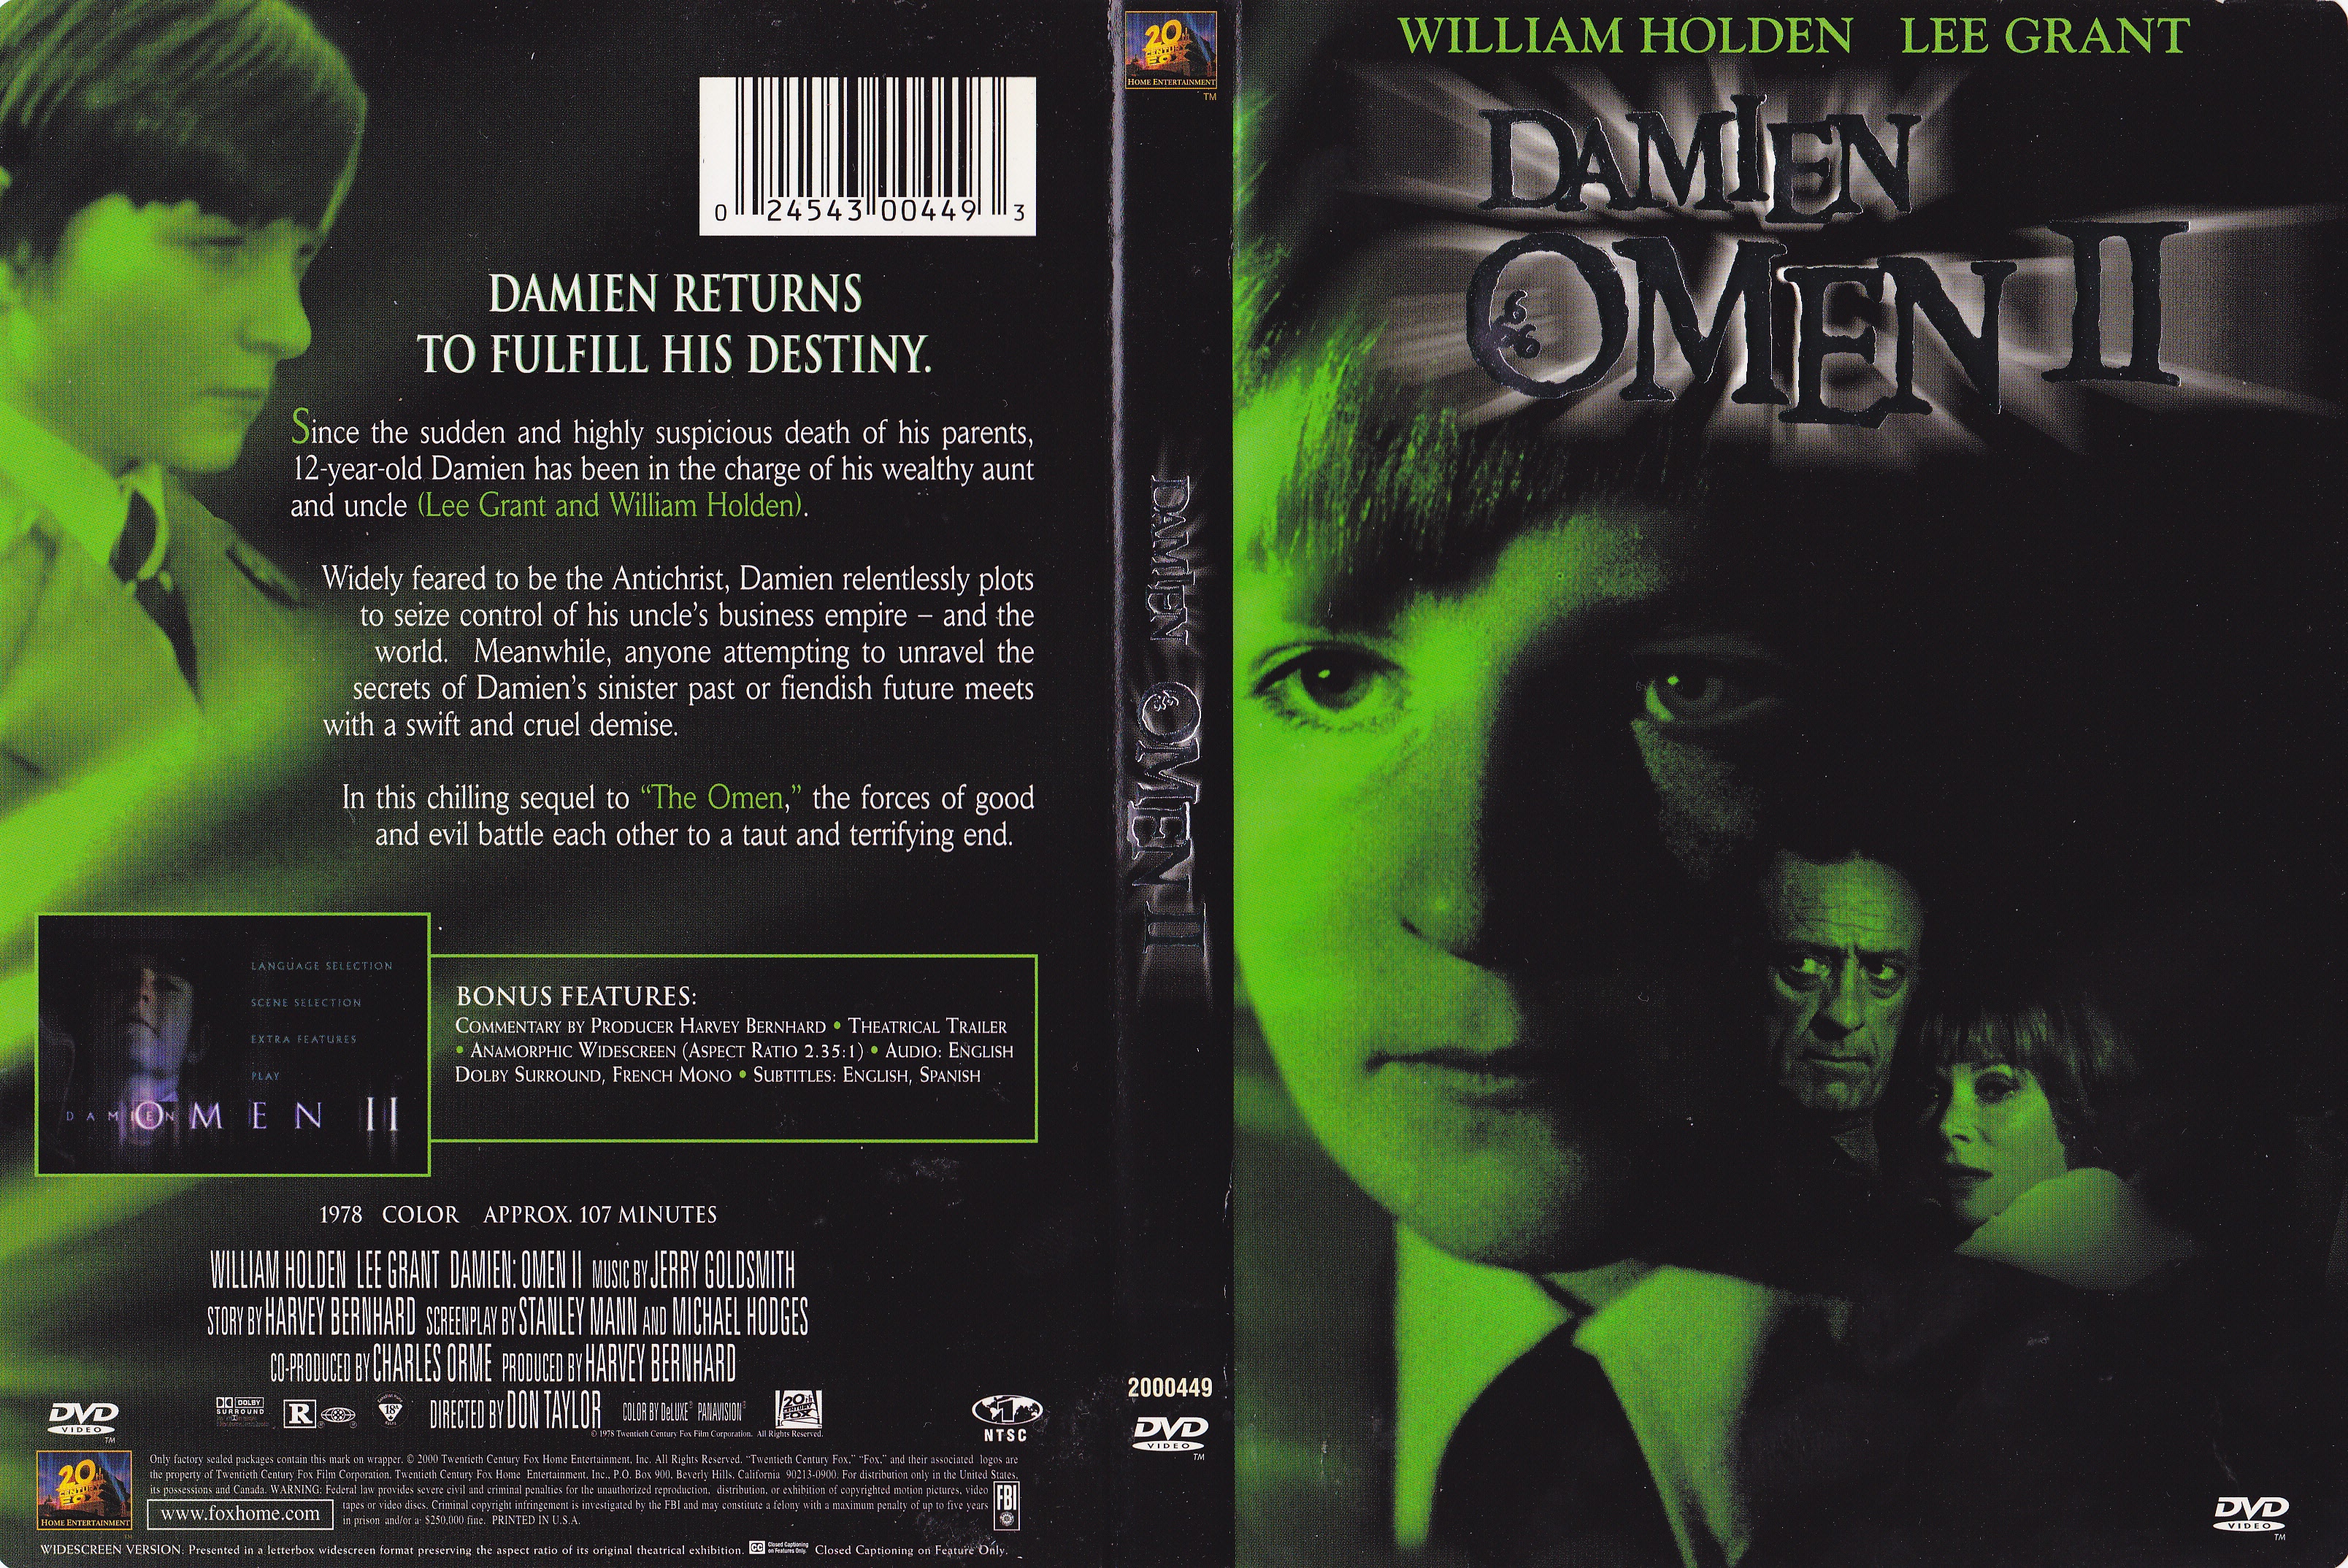 Jaquette DVD Damien omen II Zone 1